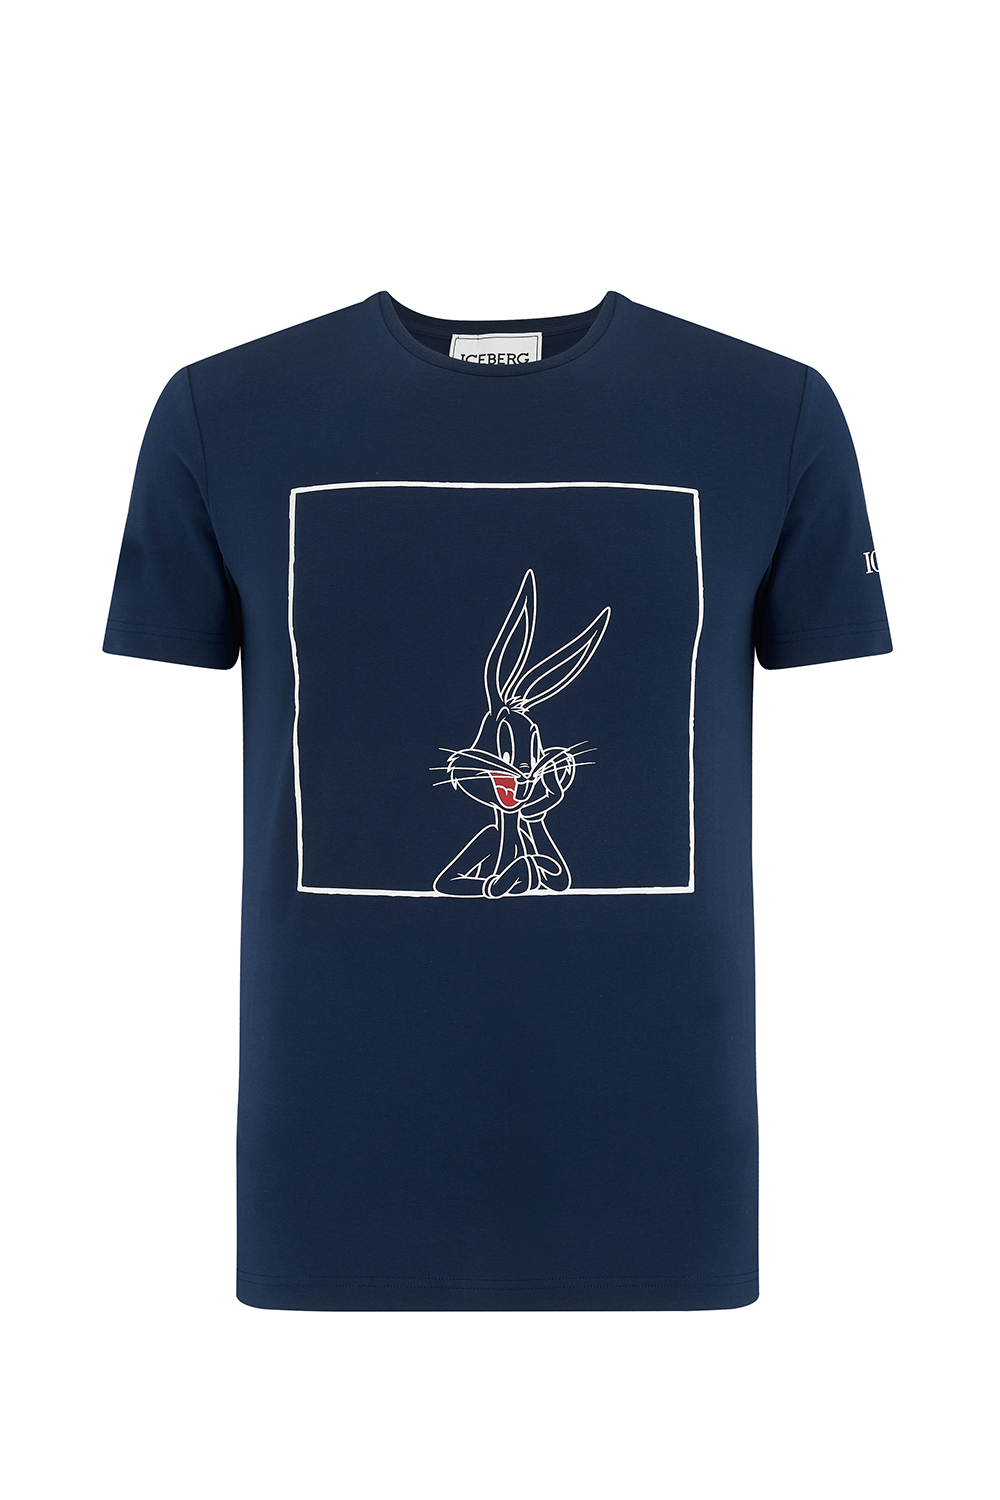 Iceberg Men’s Short Sleeve Bugs Bunny T Shirt Navy - New W20 Collection ...